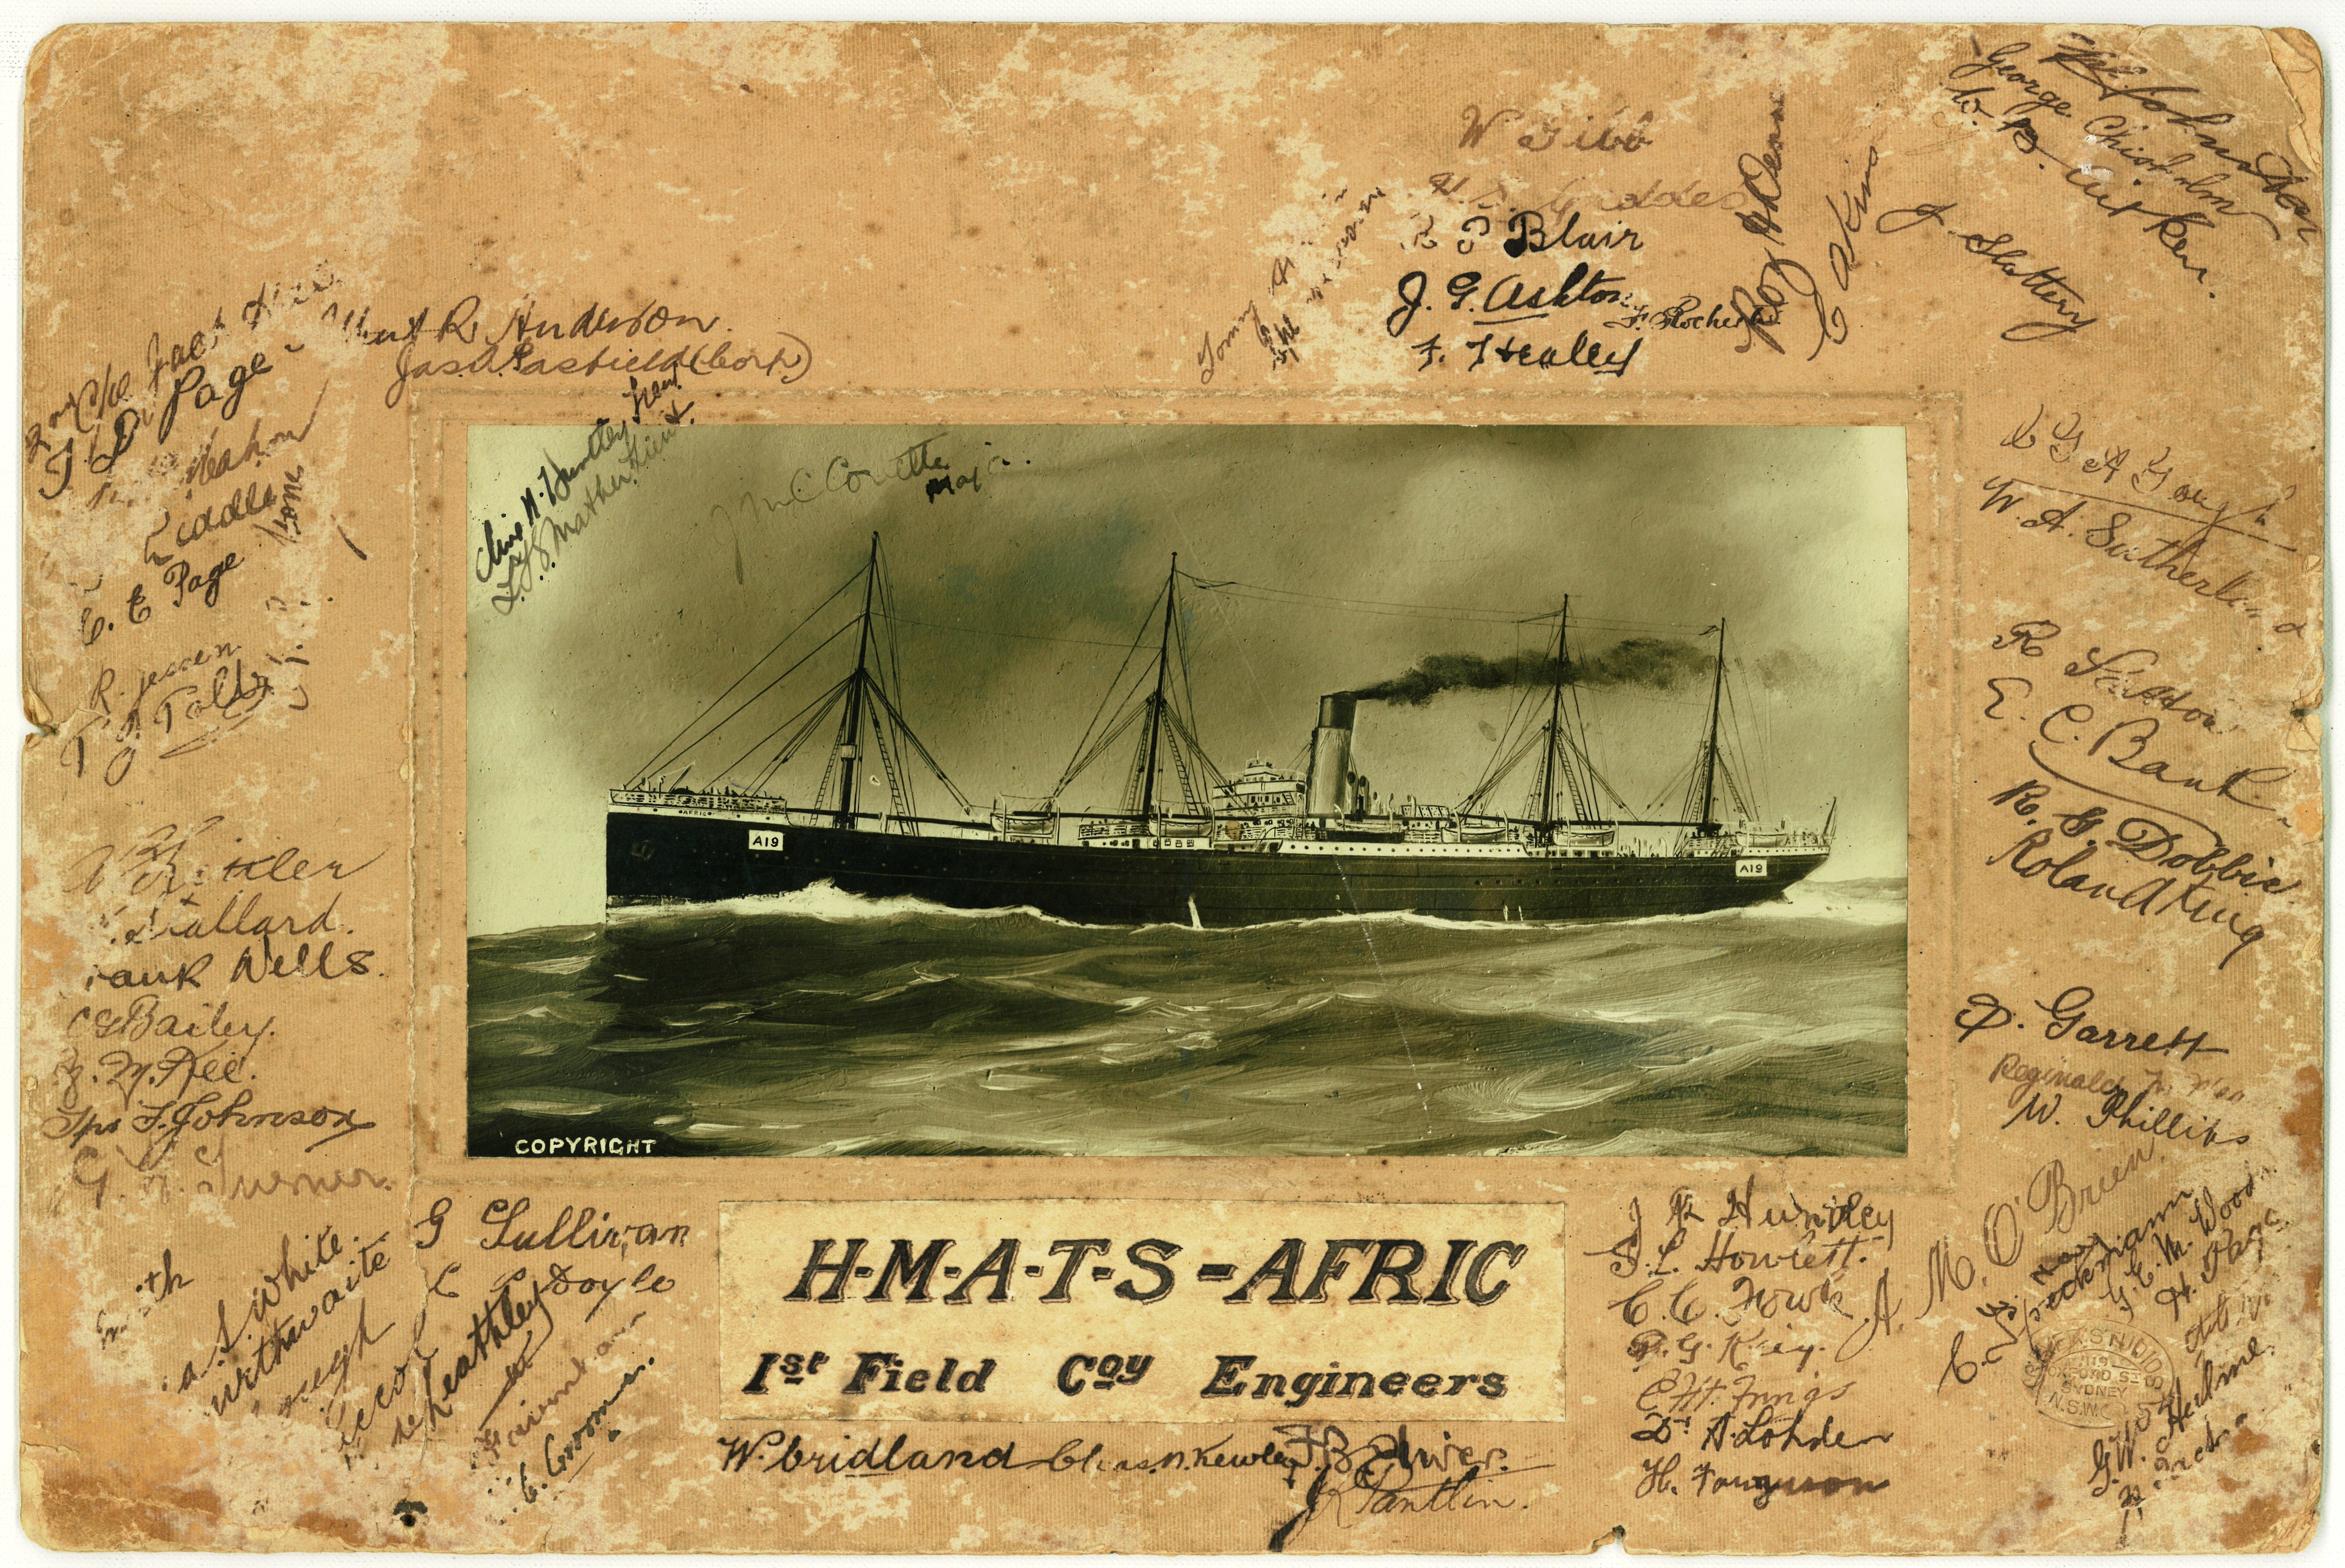 Signatures of originals hmats-afric.jpg enhanced